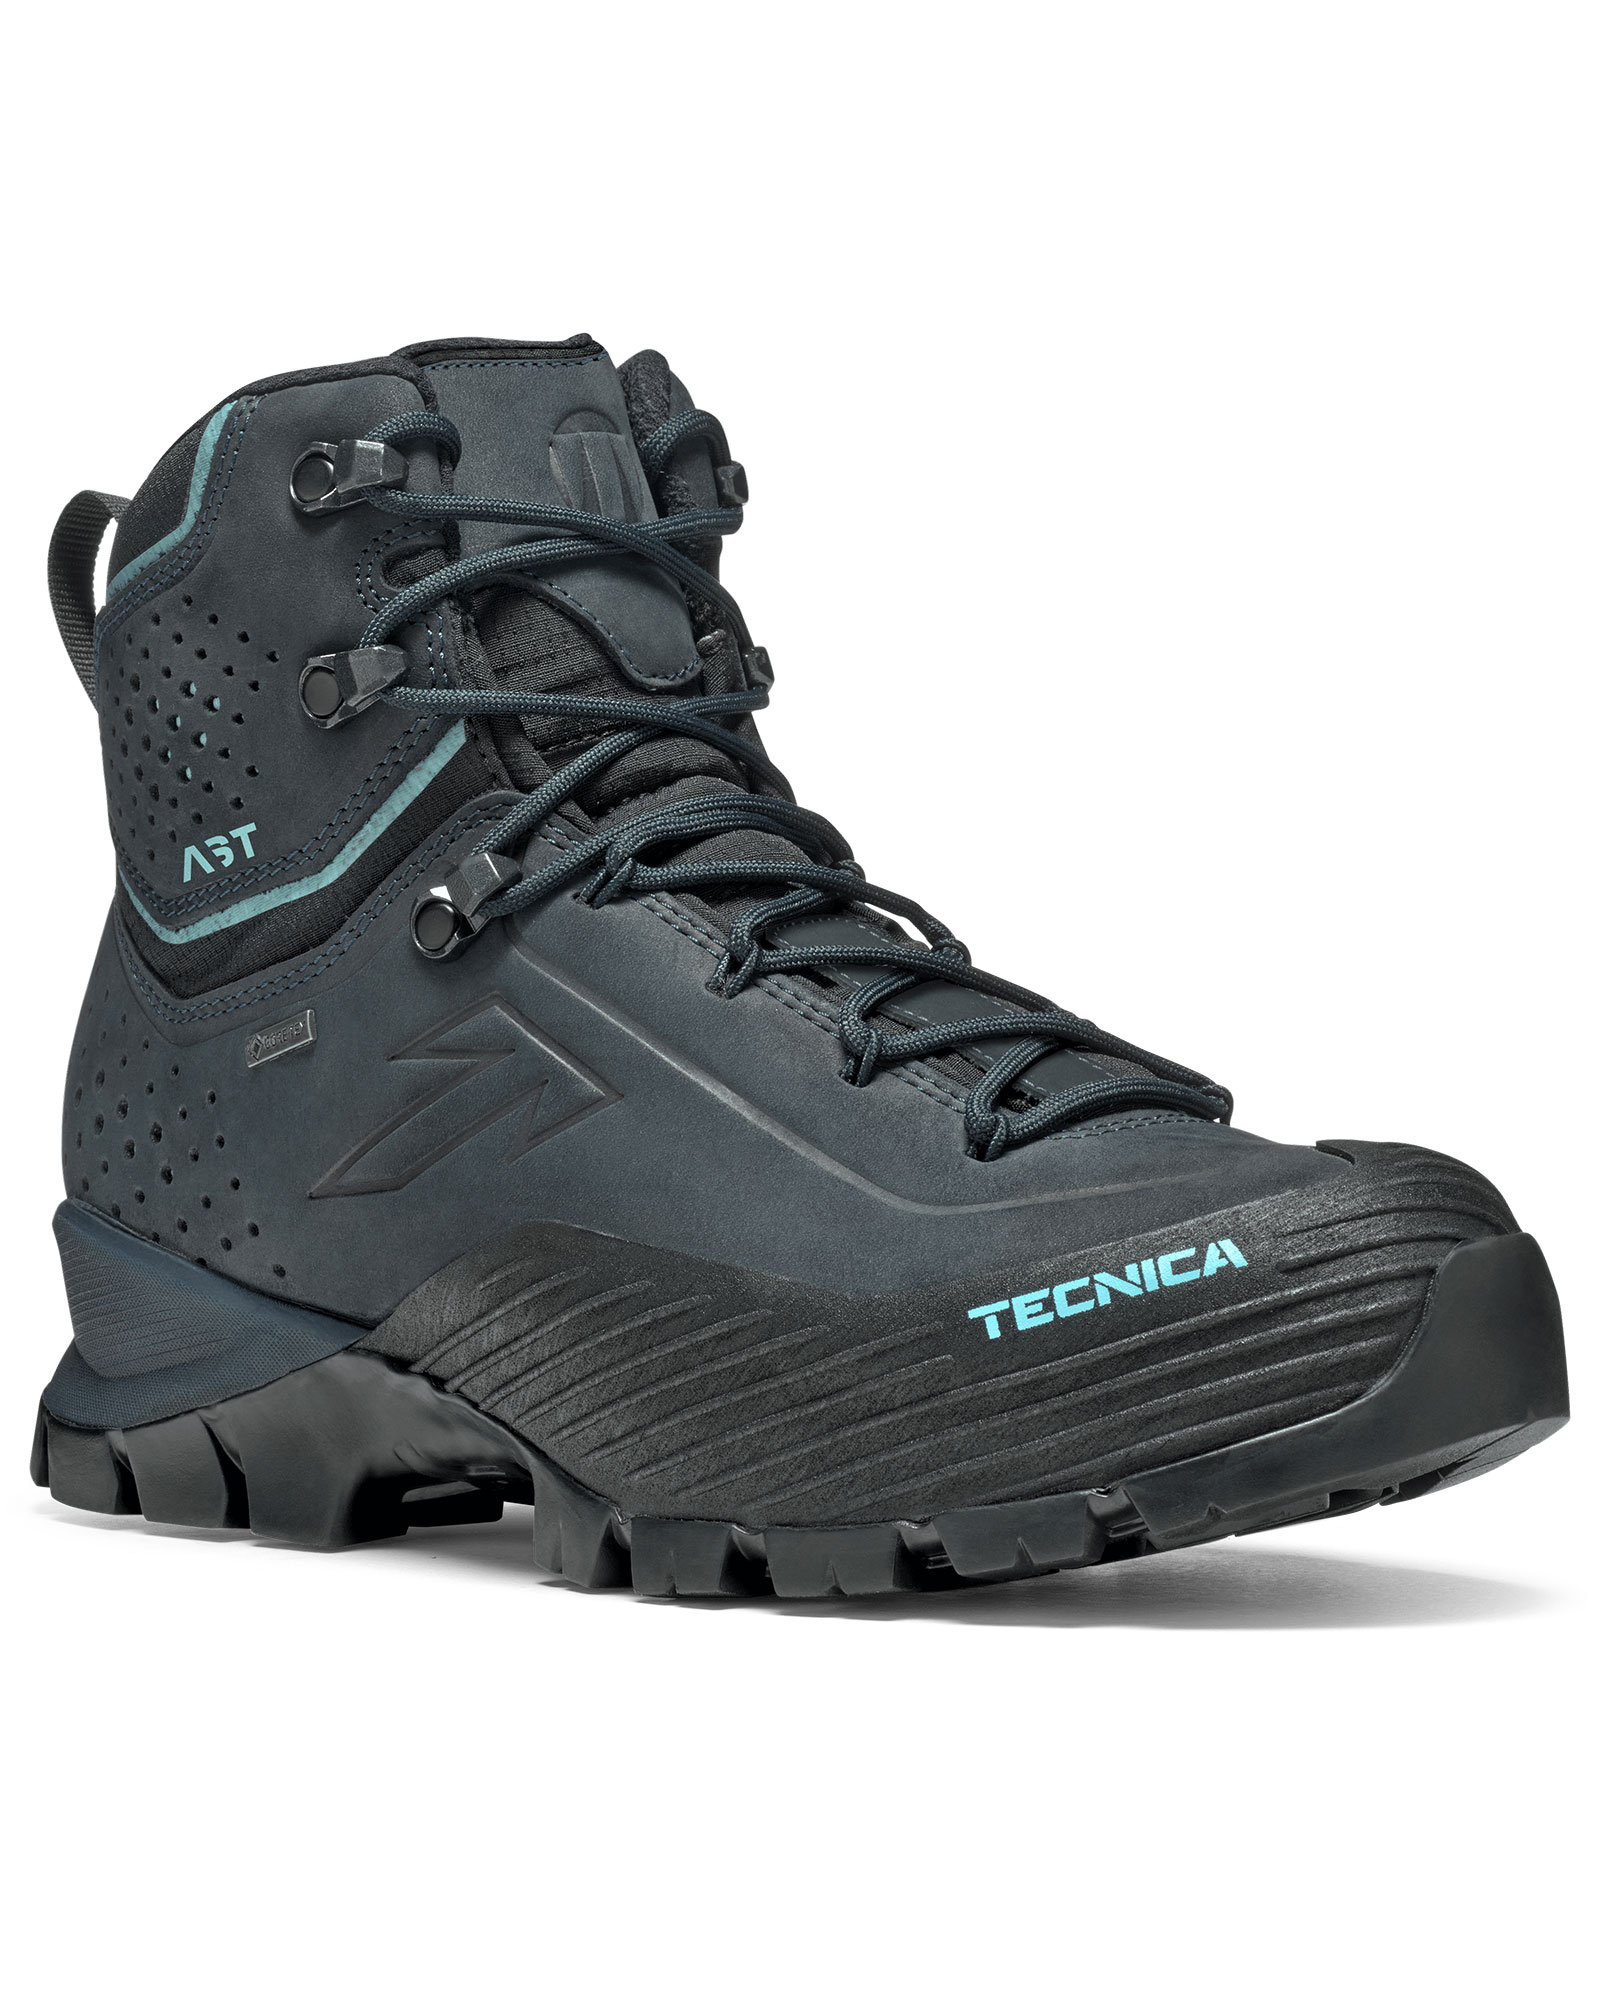 Tecnica Forge 2.0 GORE TEX Women’s Boots - Dark Avio/Light Blueness UK 6.5